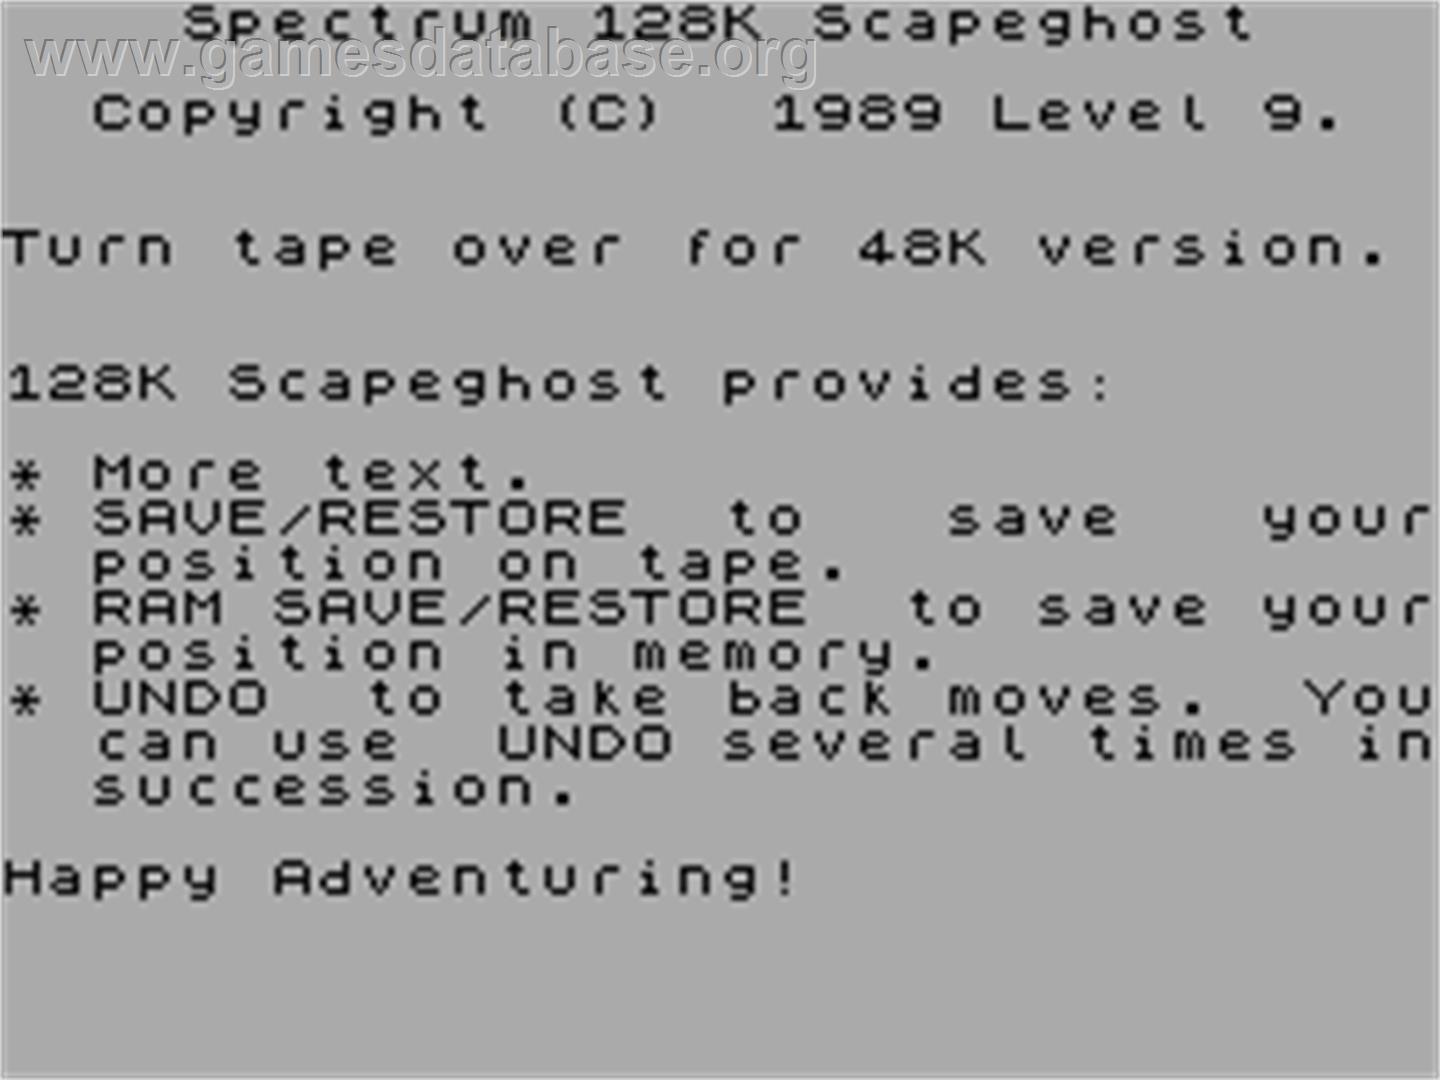 Scapeghost - Sinclair ZX Spectrum - Artwork - Title Screen